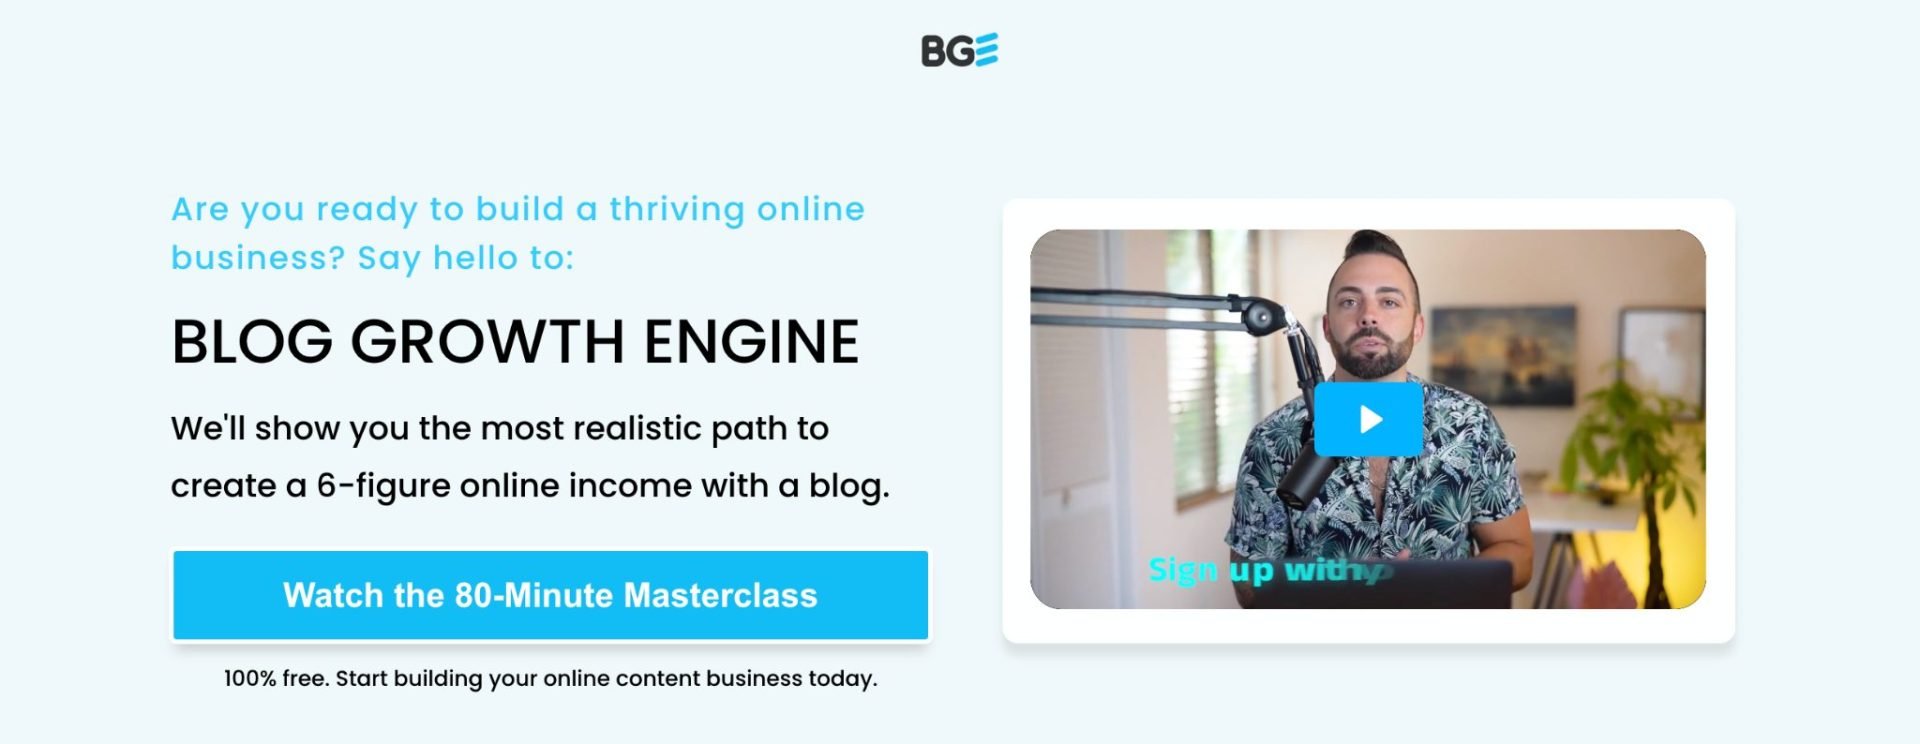 blog growth engine free masterclass 